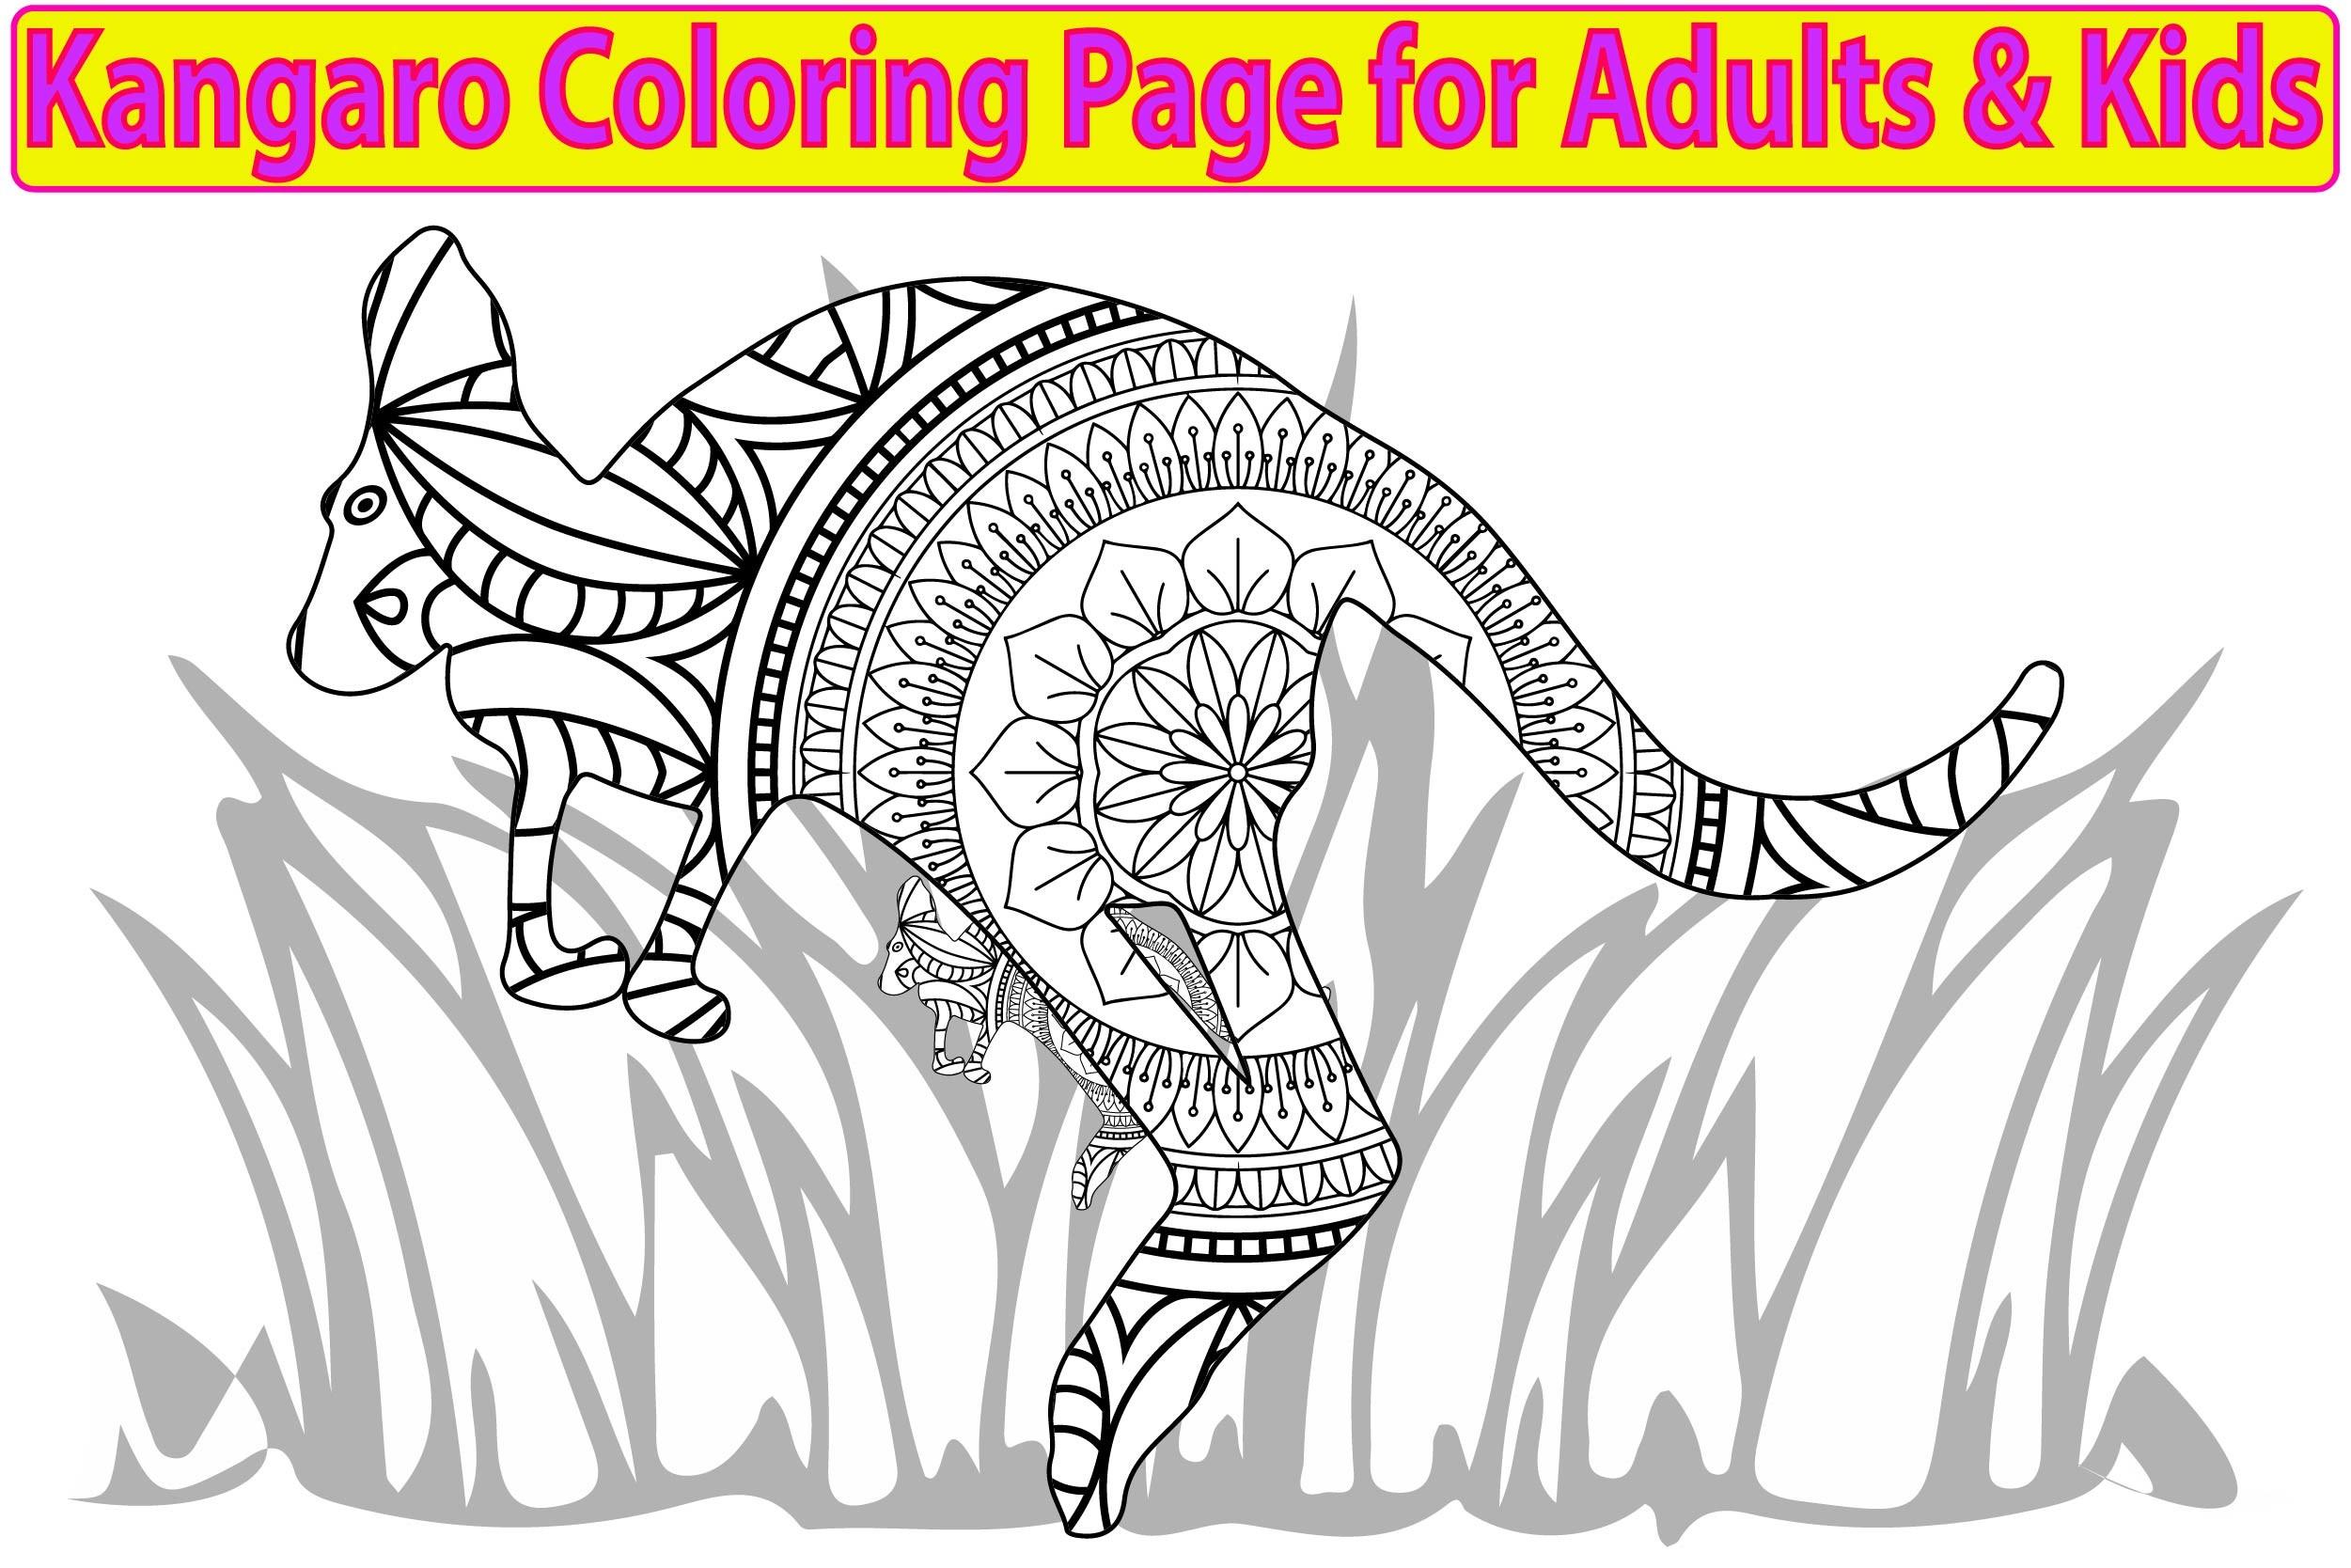 Kangaroo Coloring Page for Adults & Kids